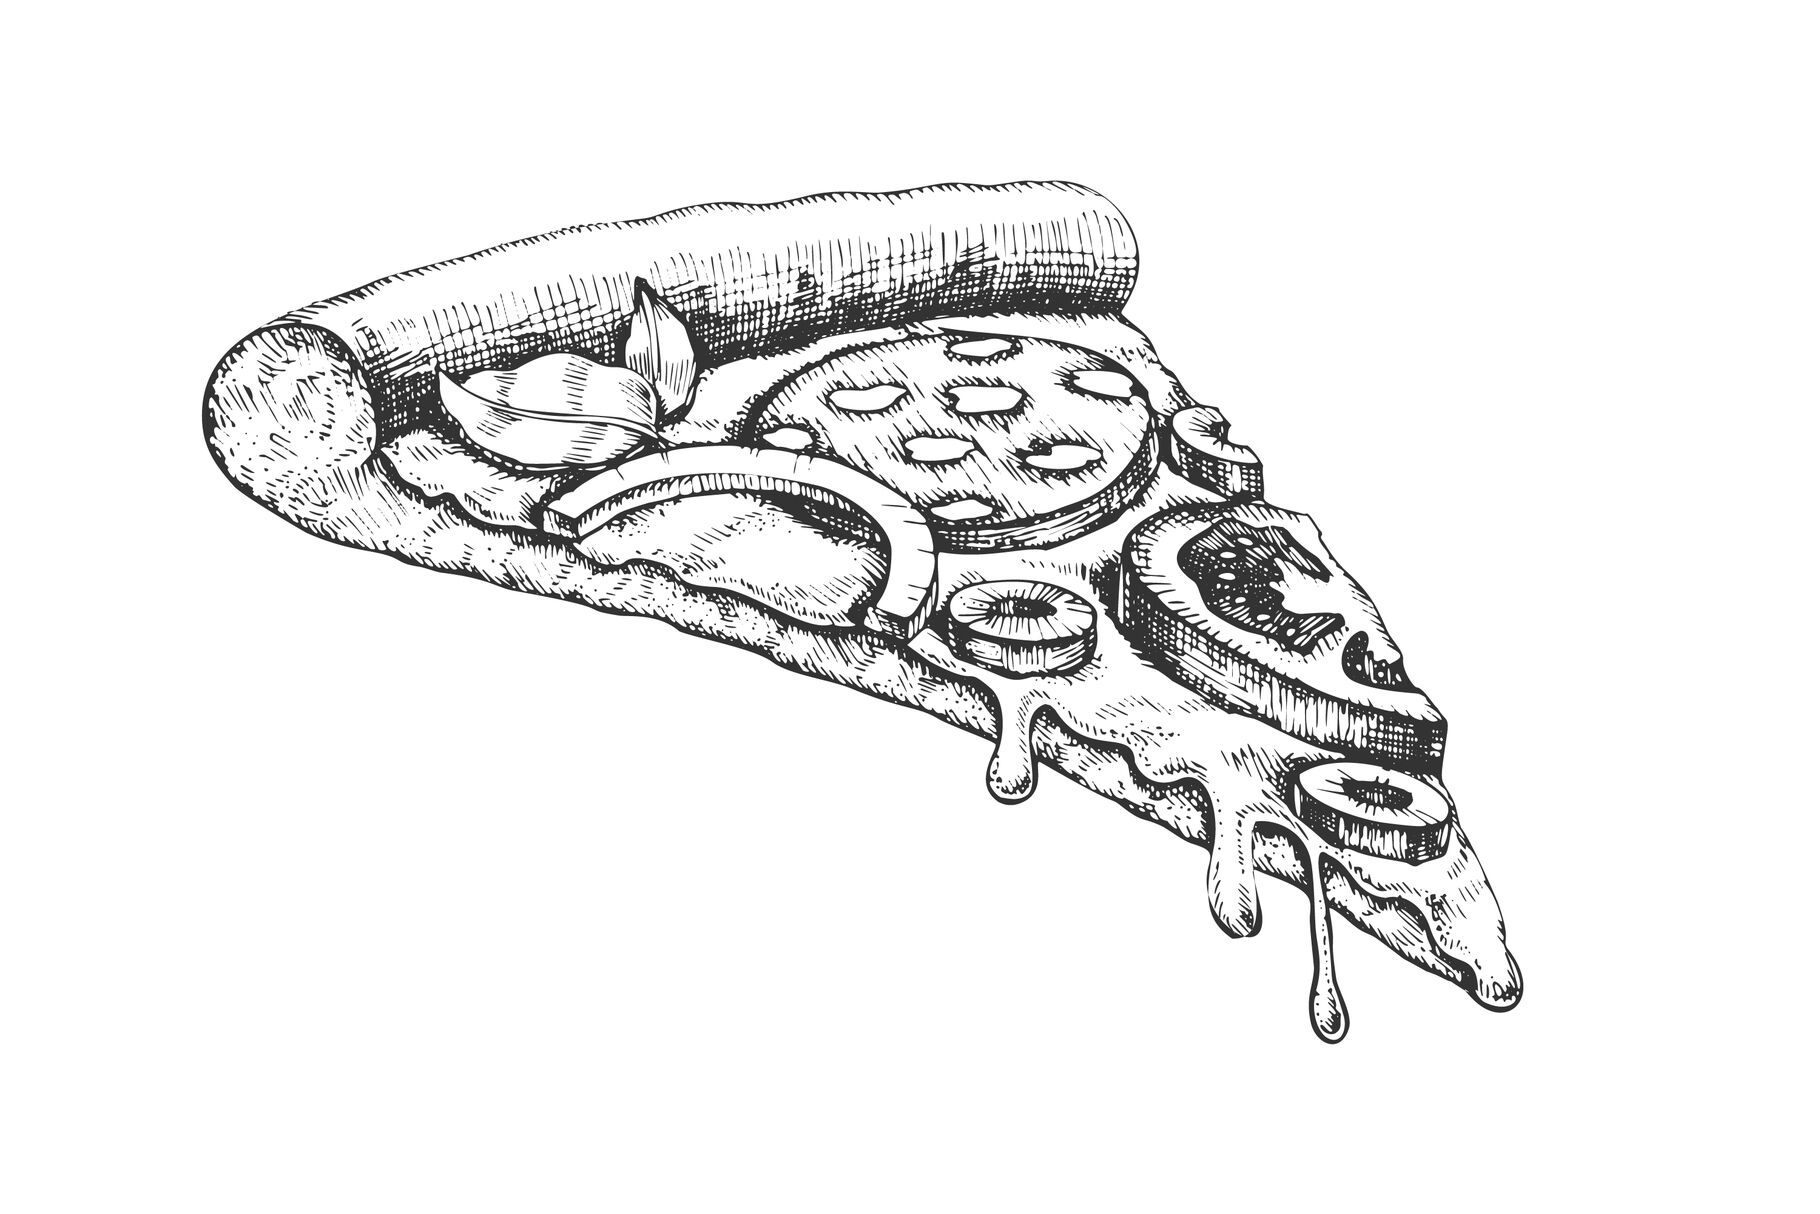 Slice of pizza sketch engraving vector illustration. T-shirt apparel print  design. Scratch board style imitation. Hand drawn image, Art Print |  Barewalls Posters & Prints | bwc76832094